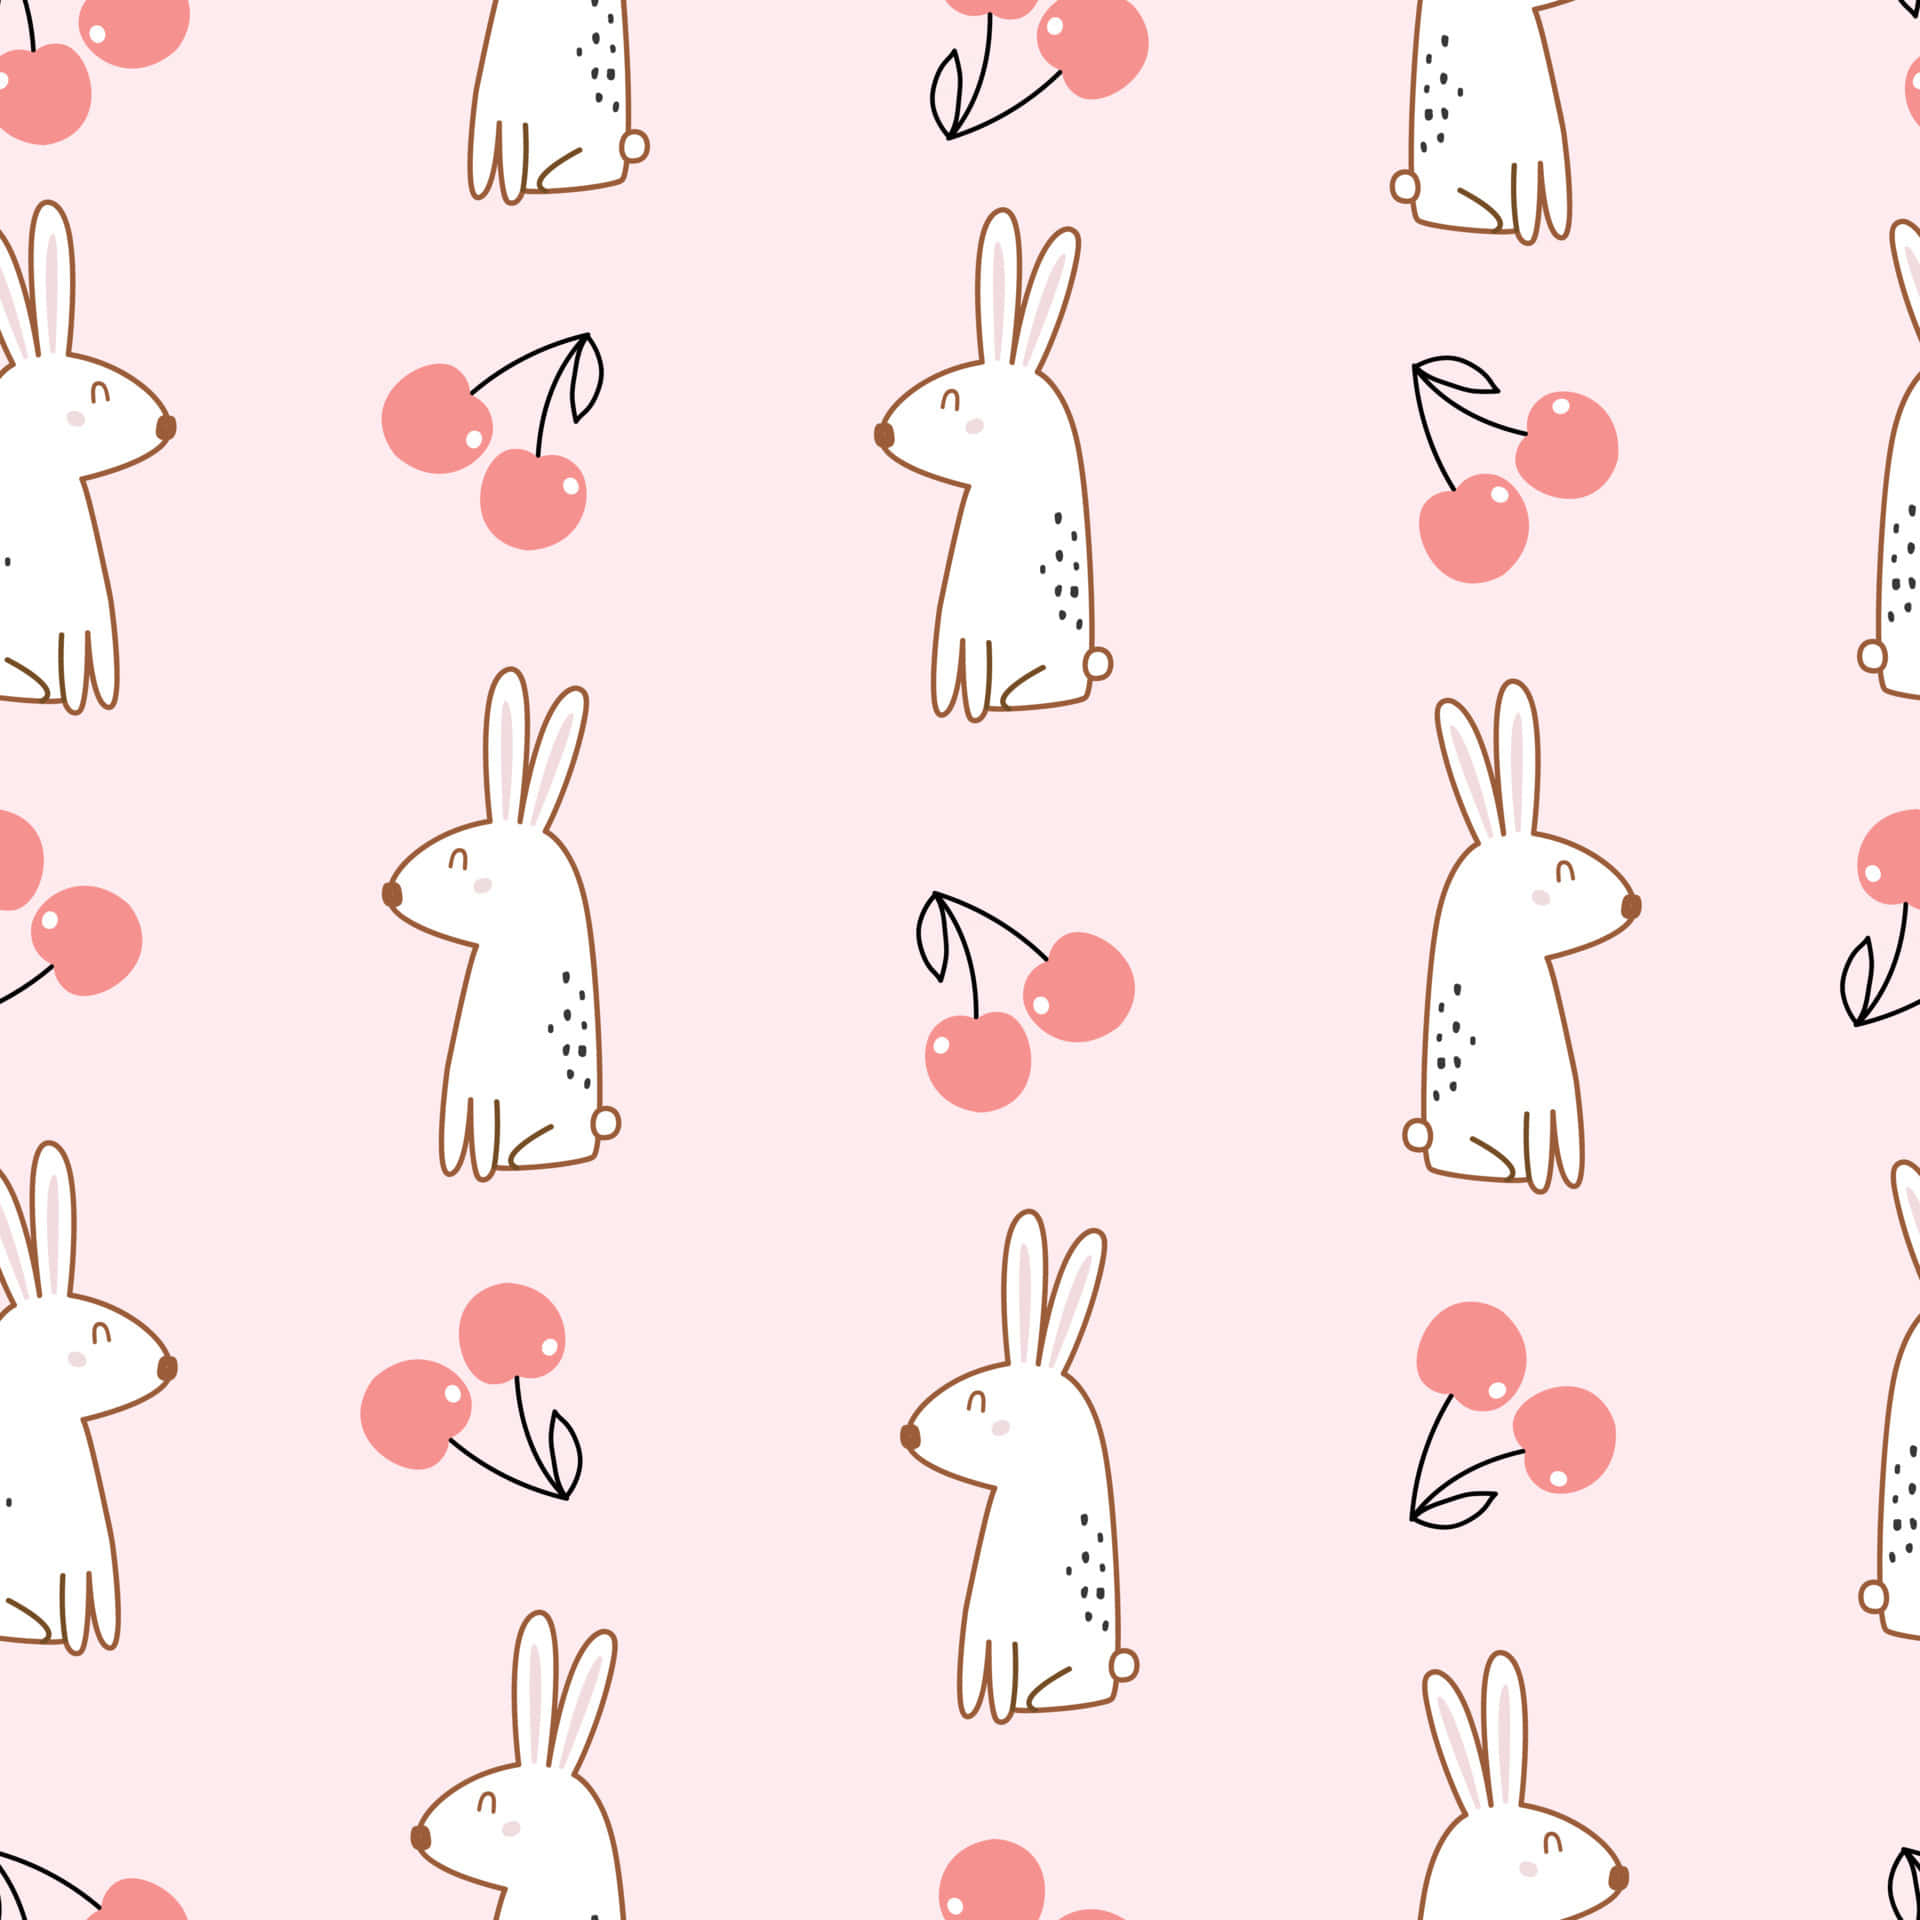 happy bunny desktop wallpaper